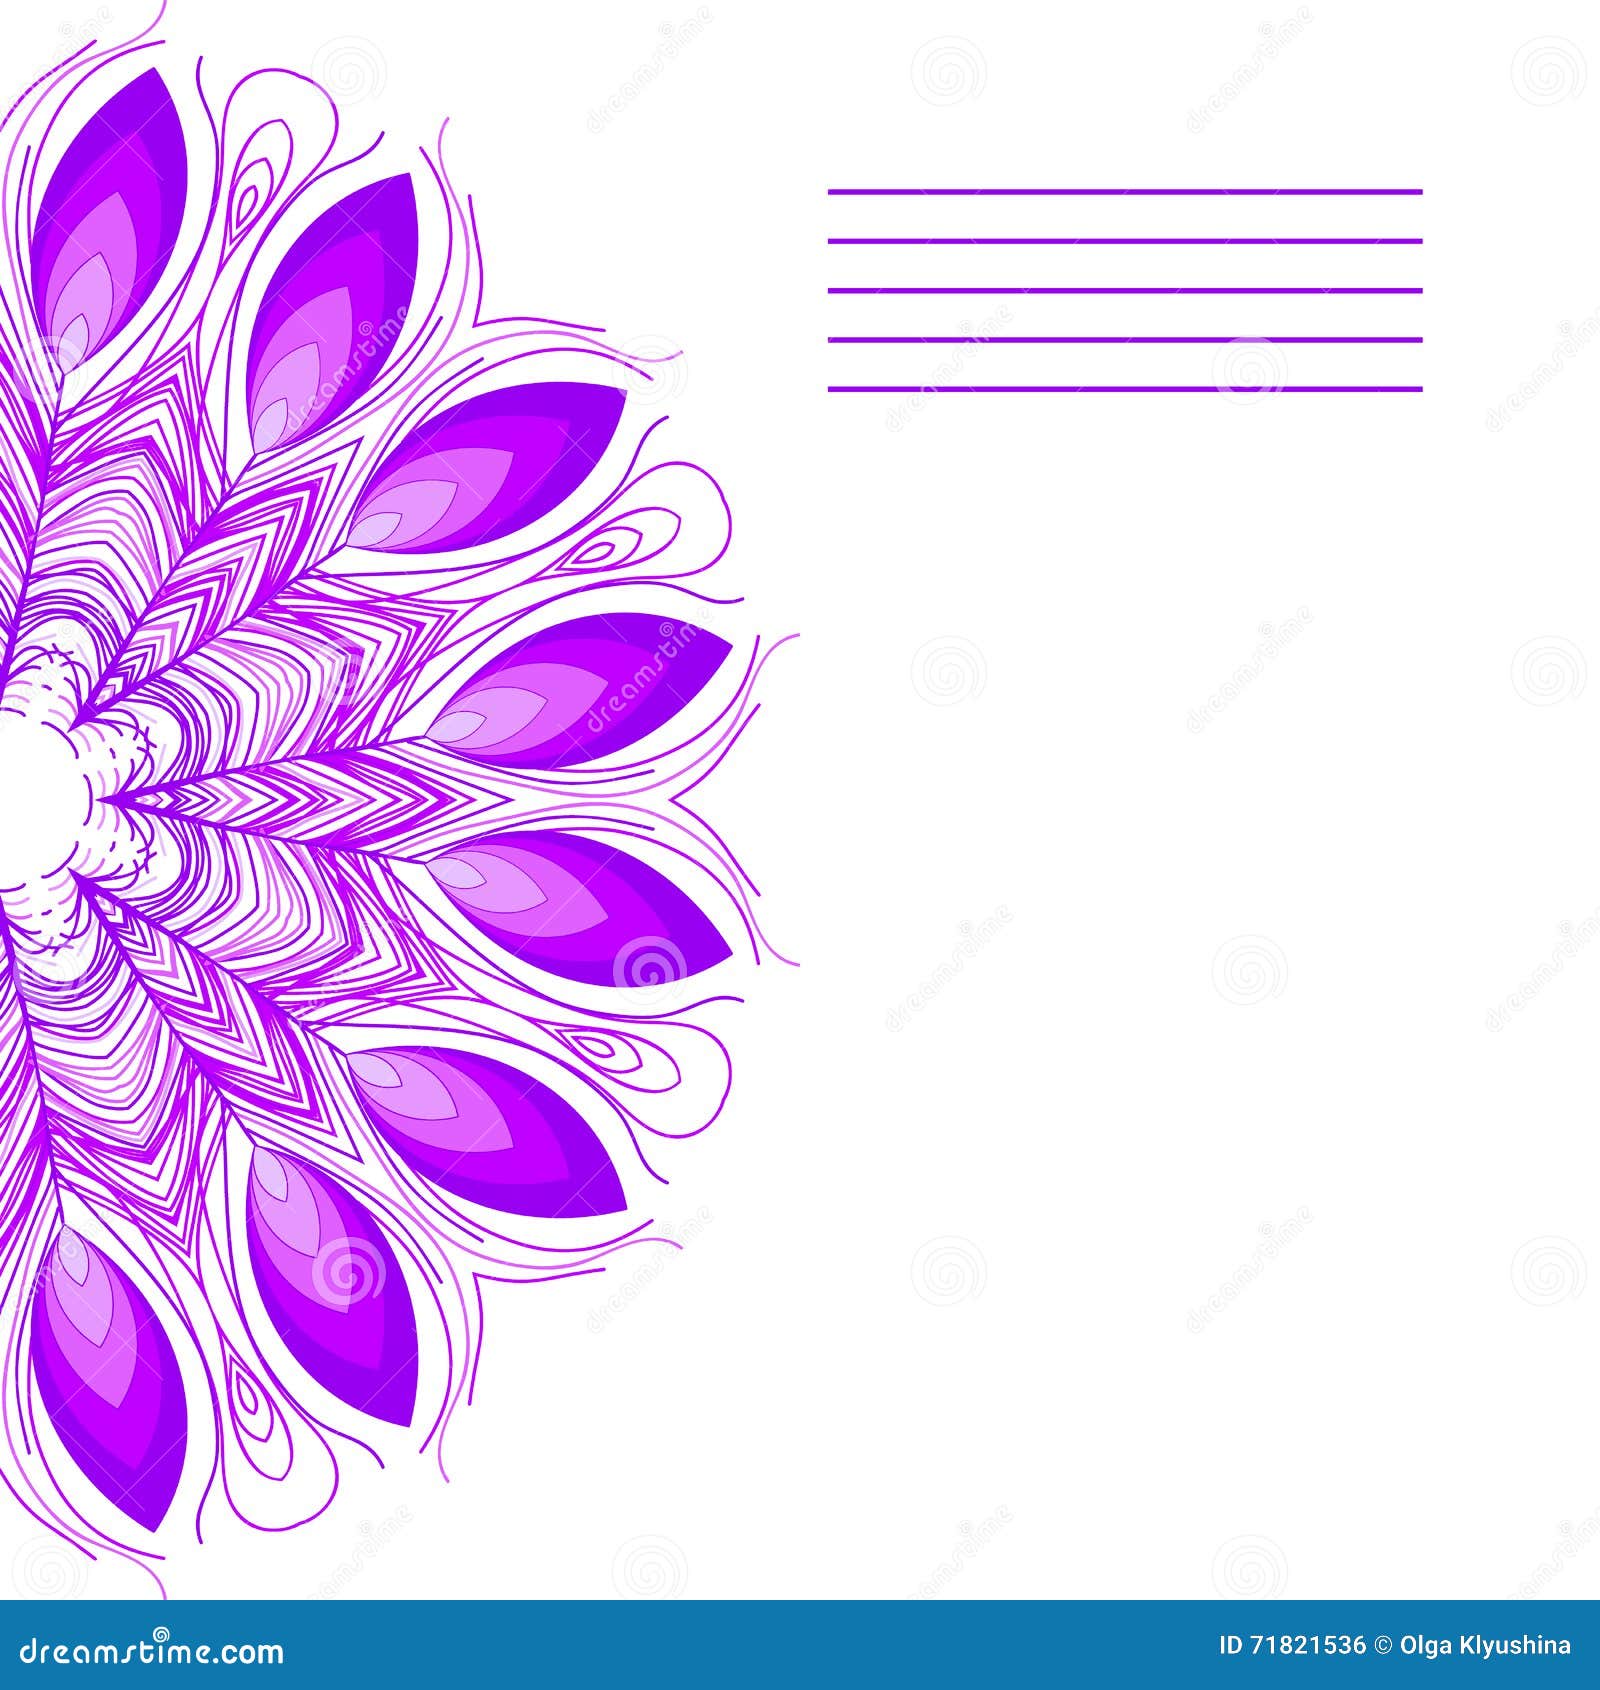 Download Mandala Border Svg Design - Layered SVG Cut File ...